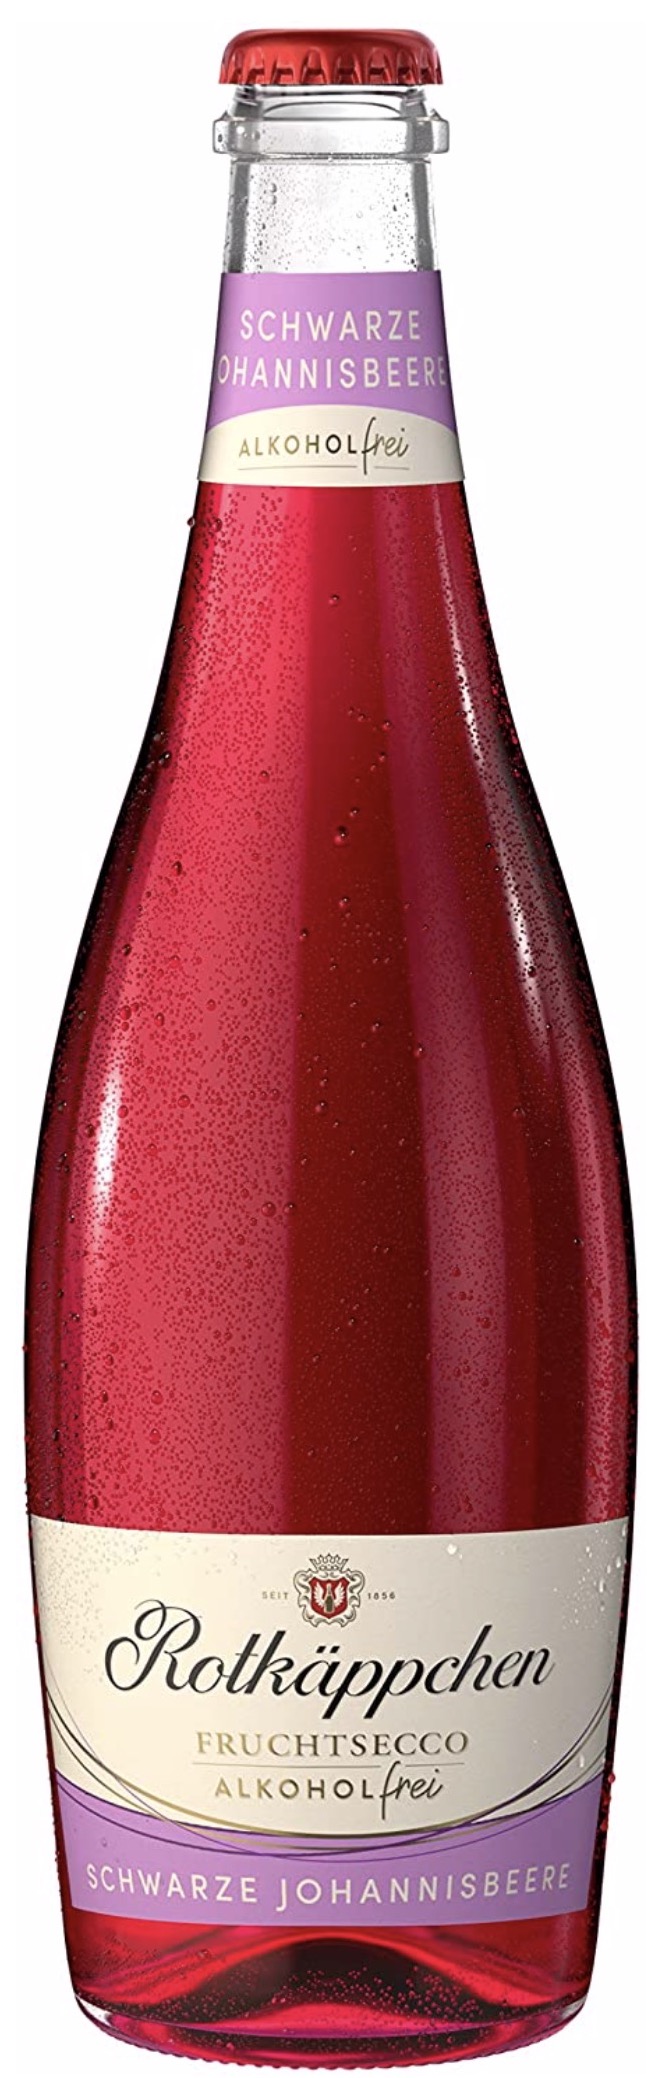 Rotkäppchen Fruchtsecco Schwarze Johannisbeere Alkoholfrei 0,3% vol. 0,75L